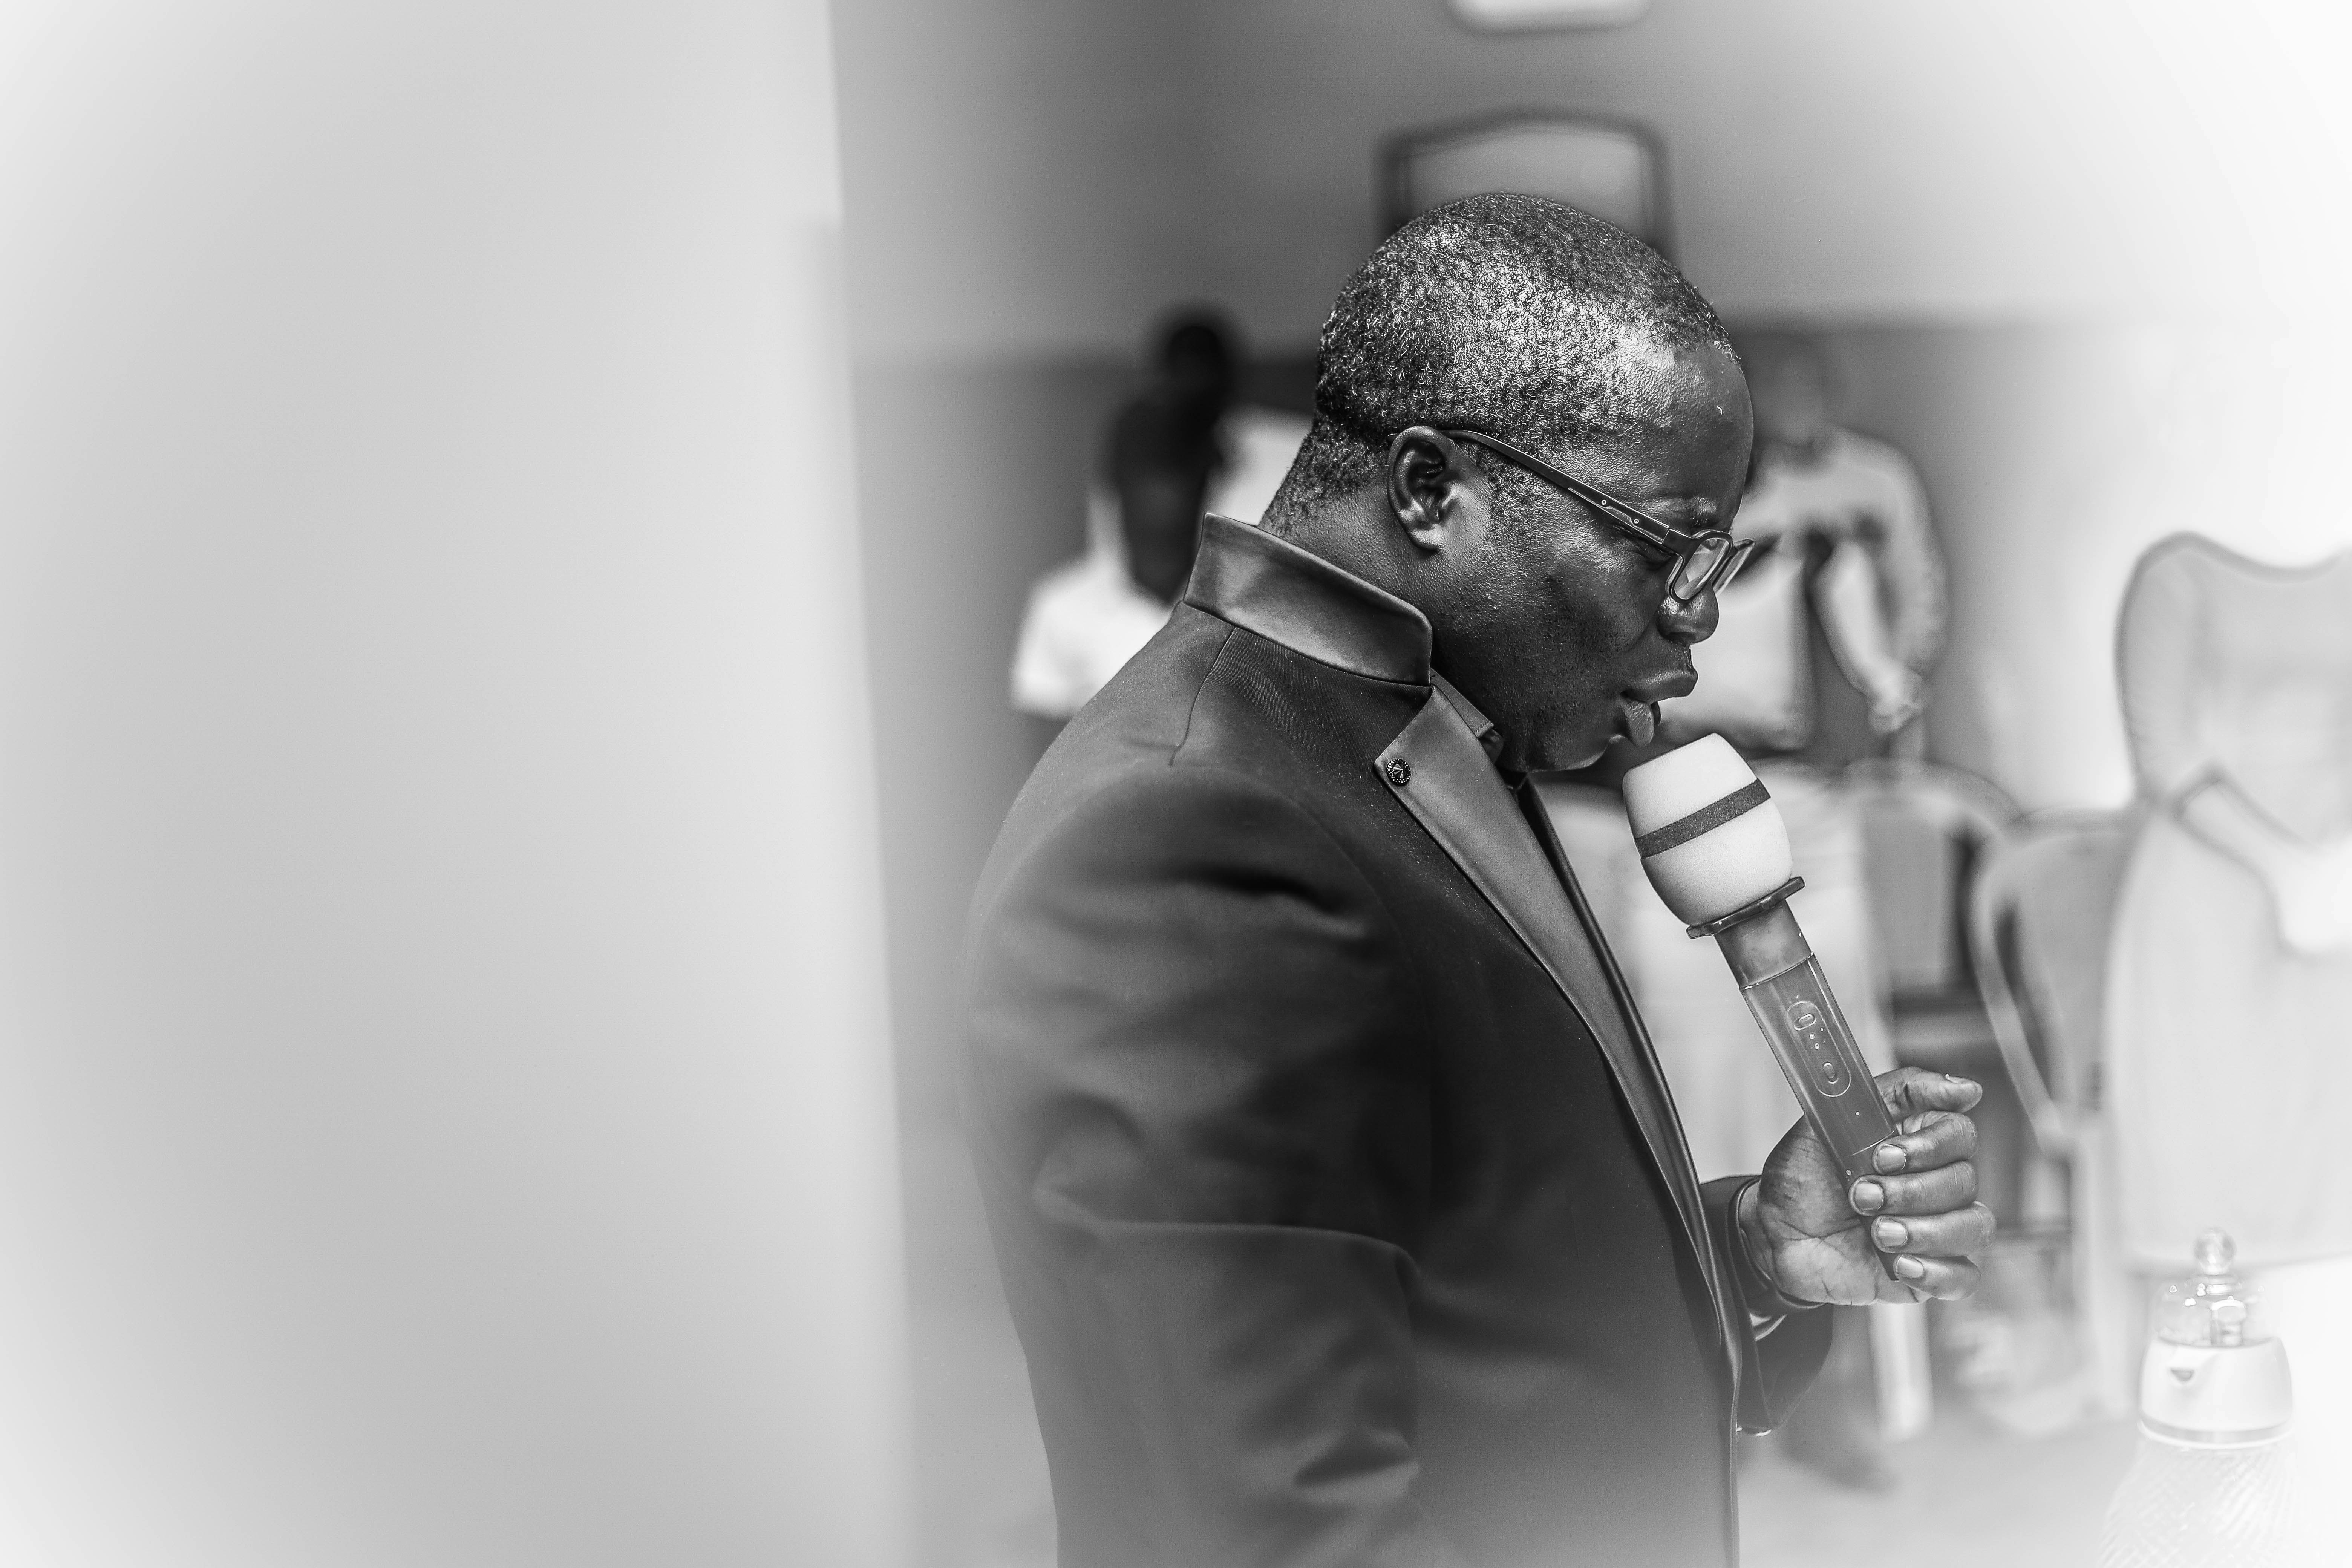 Niyi Adebayo
(Lead Pastor, True Worshippers Church)